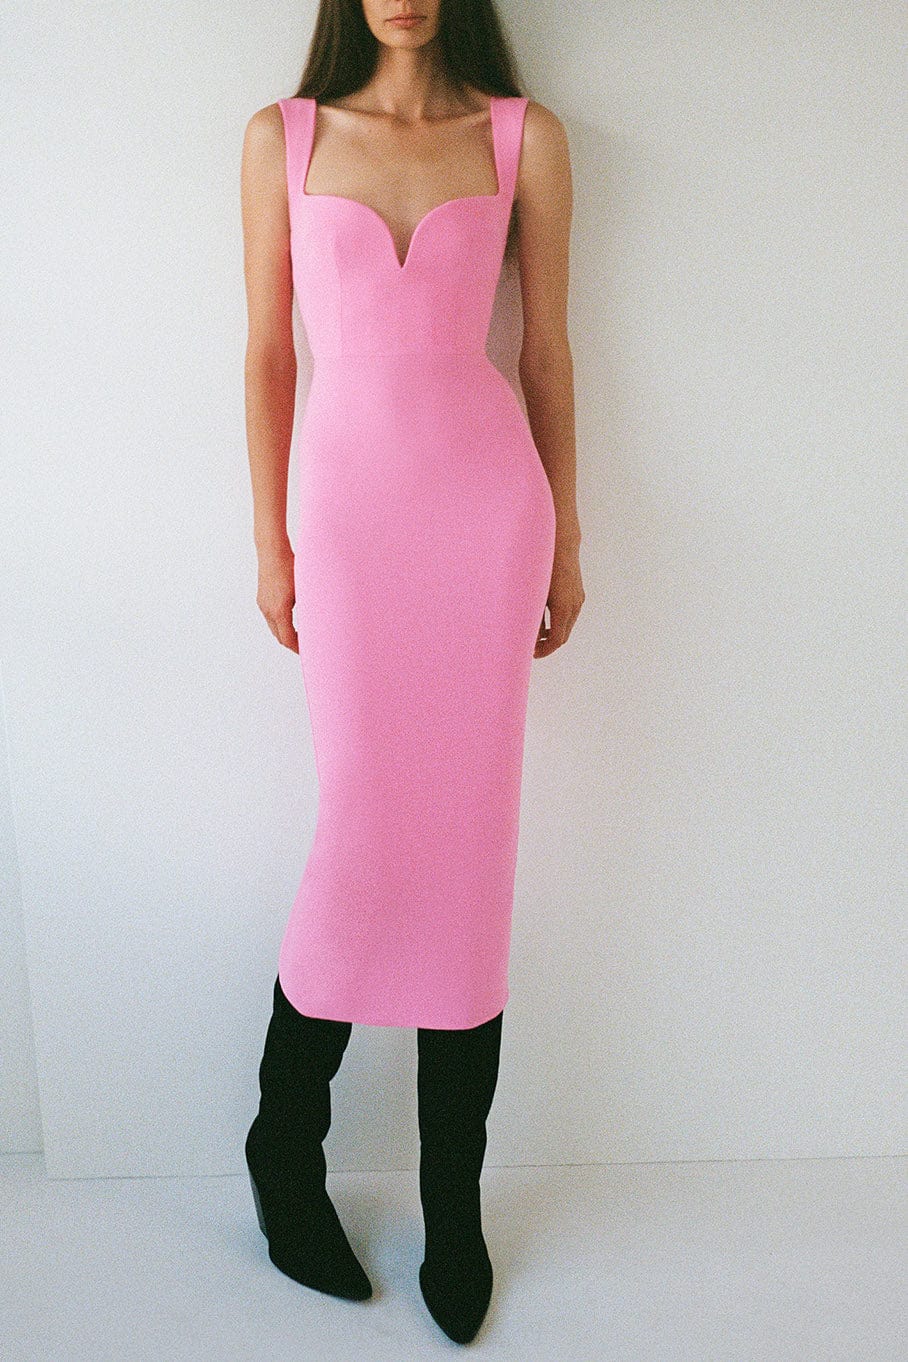 Alex Perry - Spencer Midi Dress - Pink